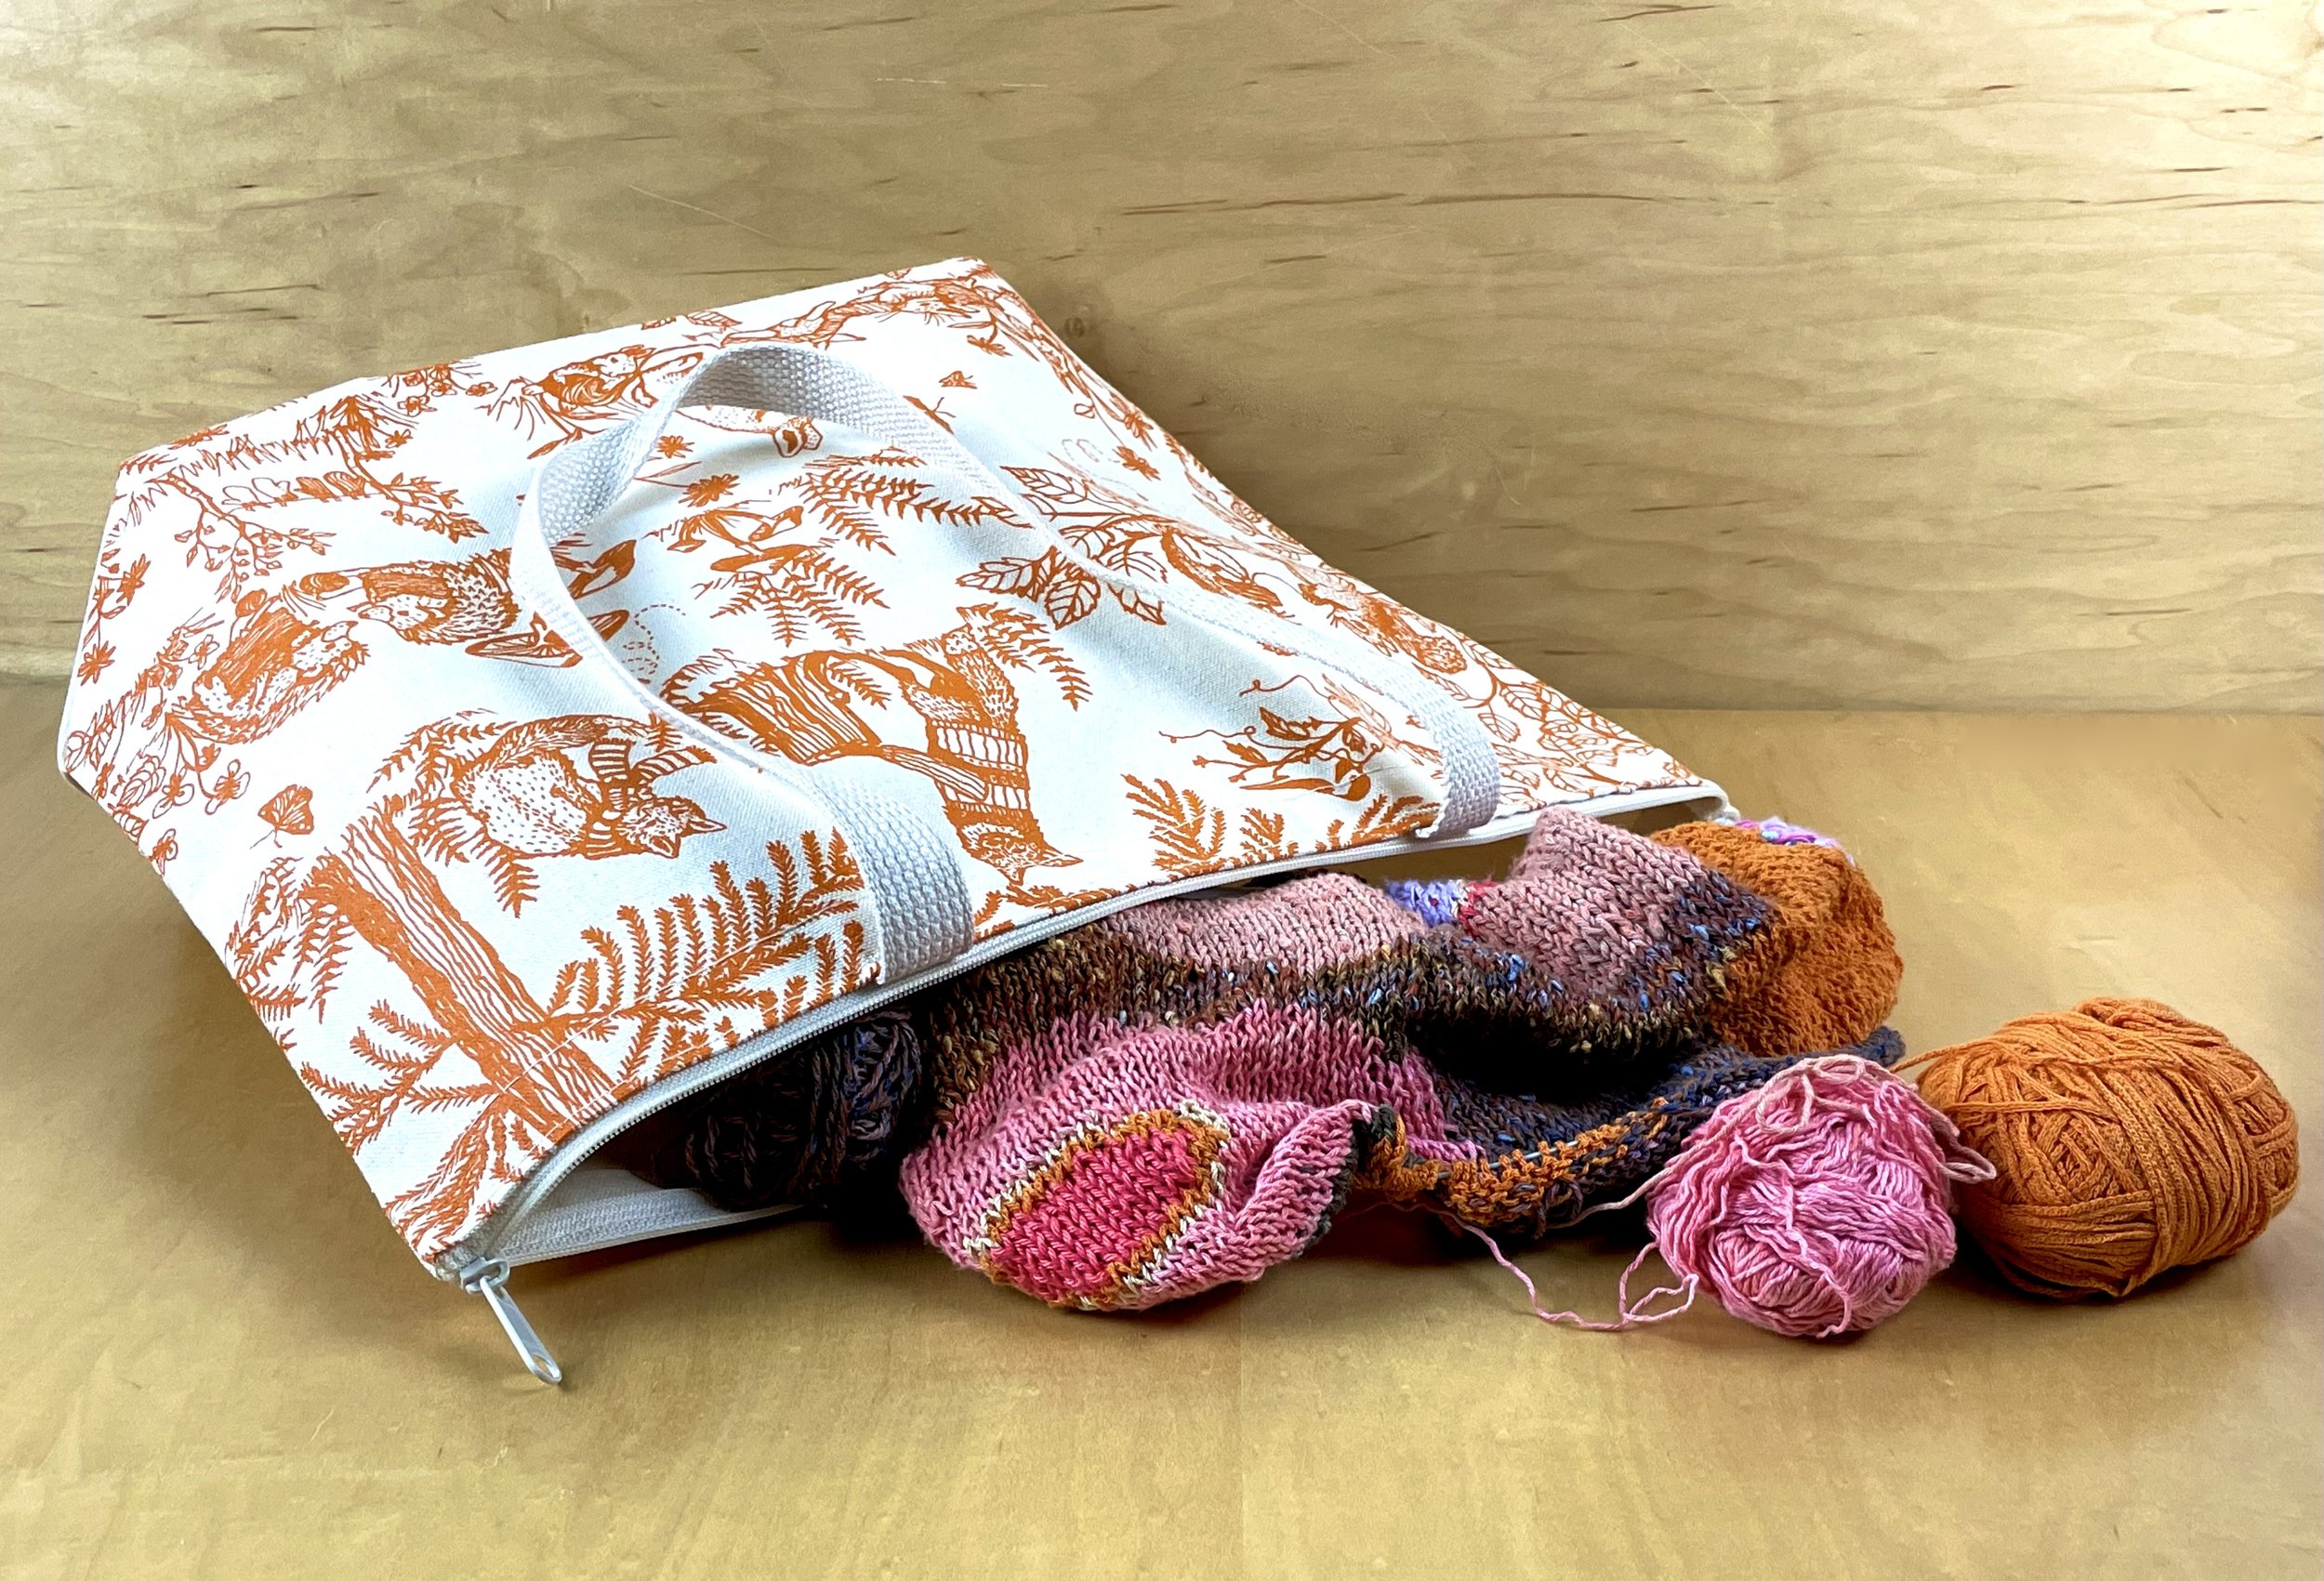 Knitting bags by Bonnie Bishoff – Heavenly Yarns / Fiber of Maine